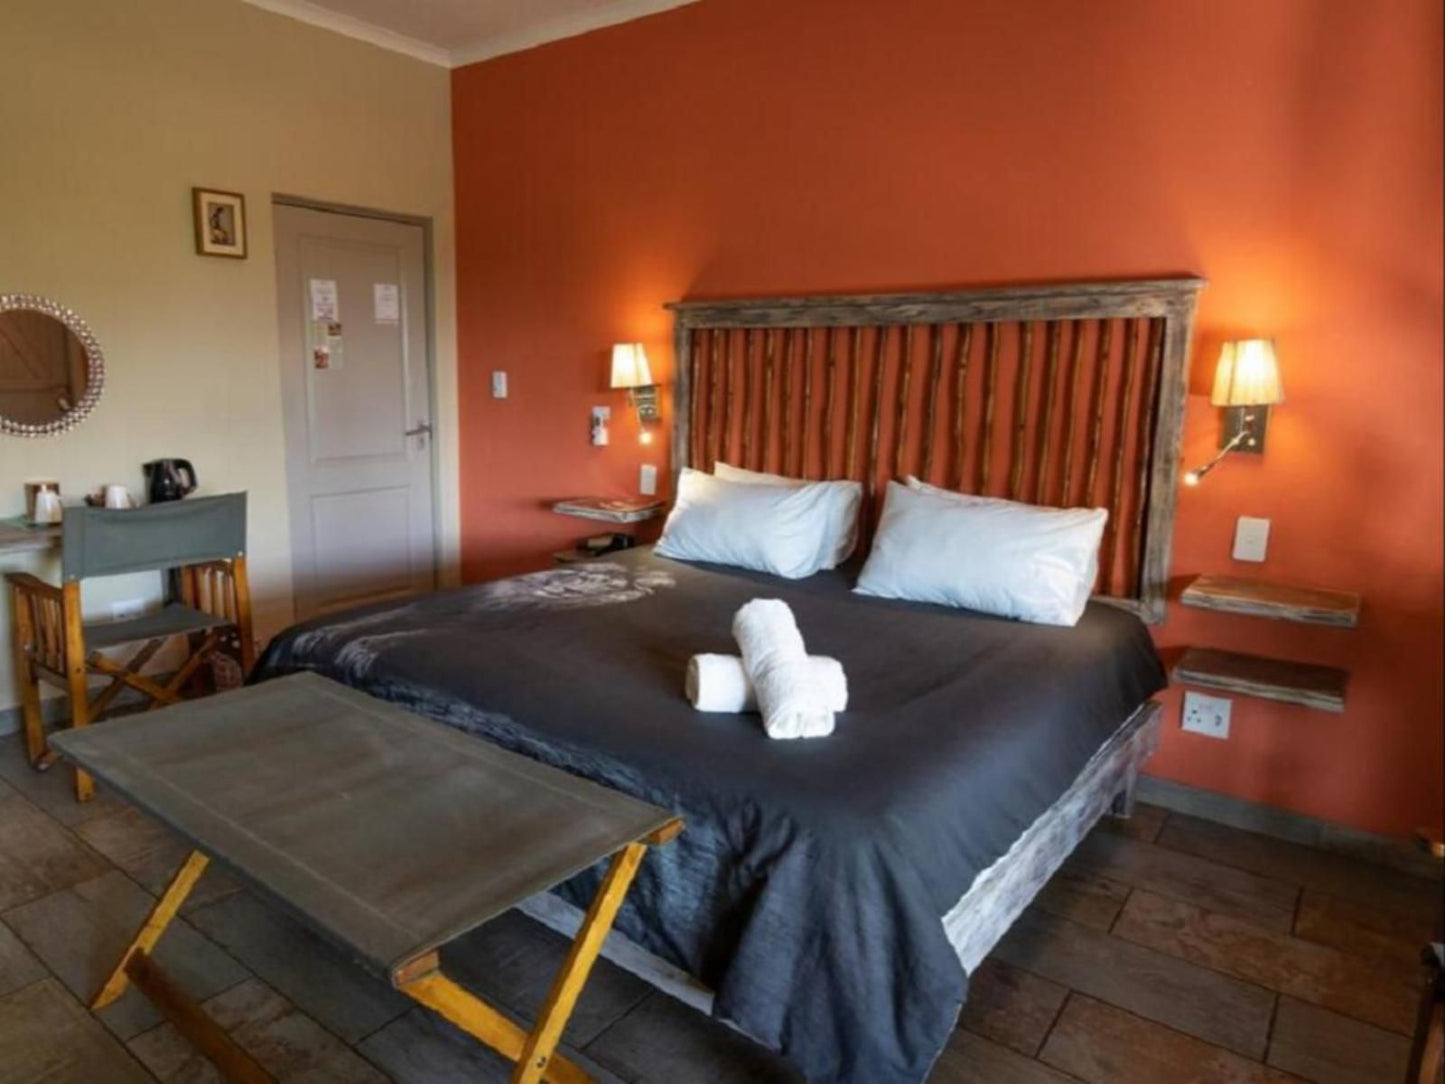 The Belgium Inn Hoedspruit Limpopo Province South Africa Bedroom